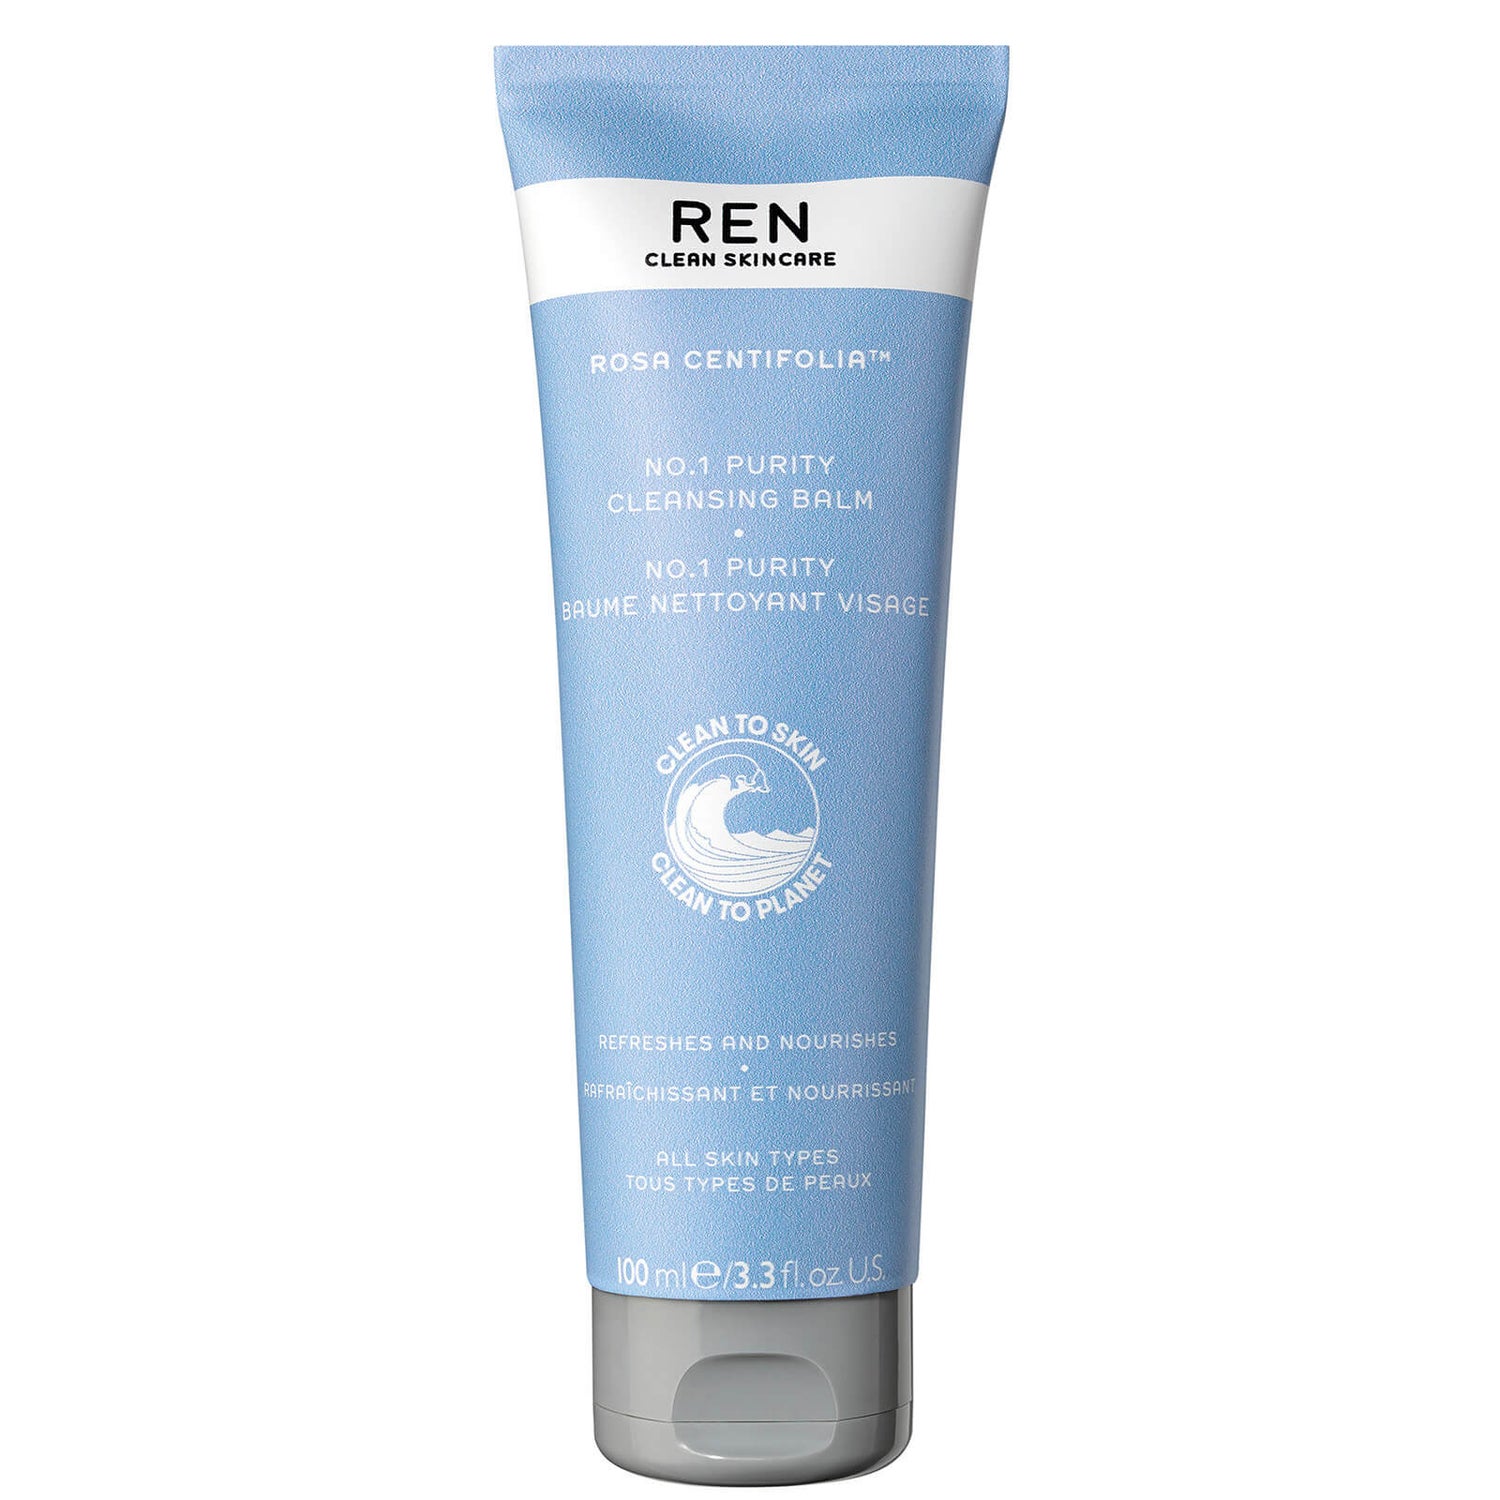 REN Clean Skincare Rosa Centifolia No. 1 Purity Cleansing Balm (3.3 fl. oz.)